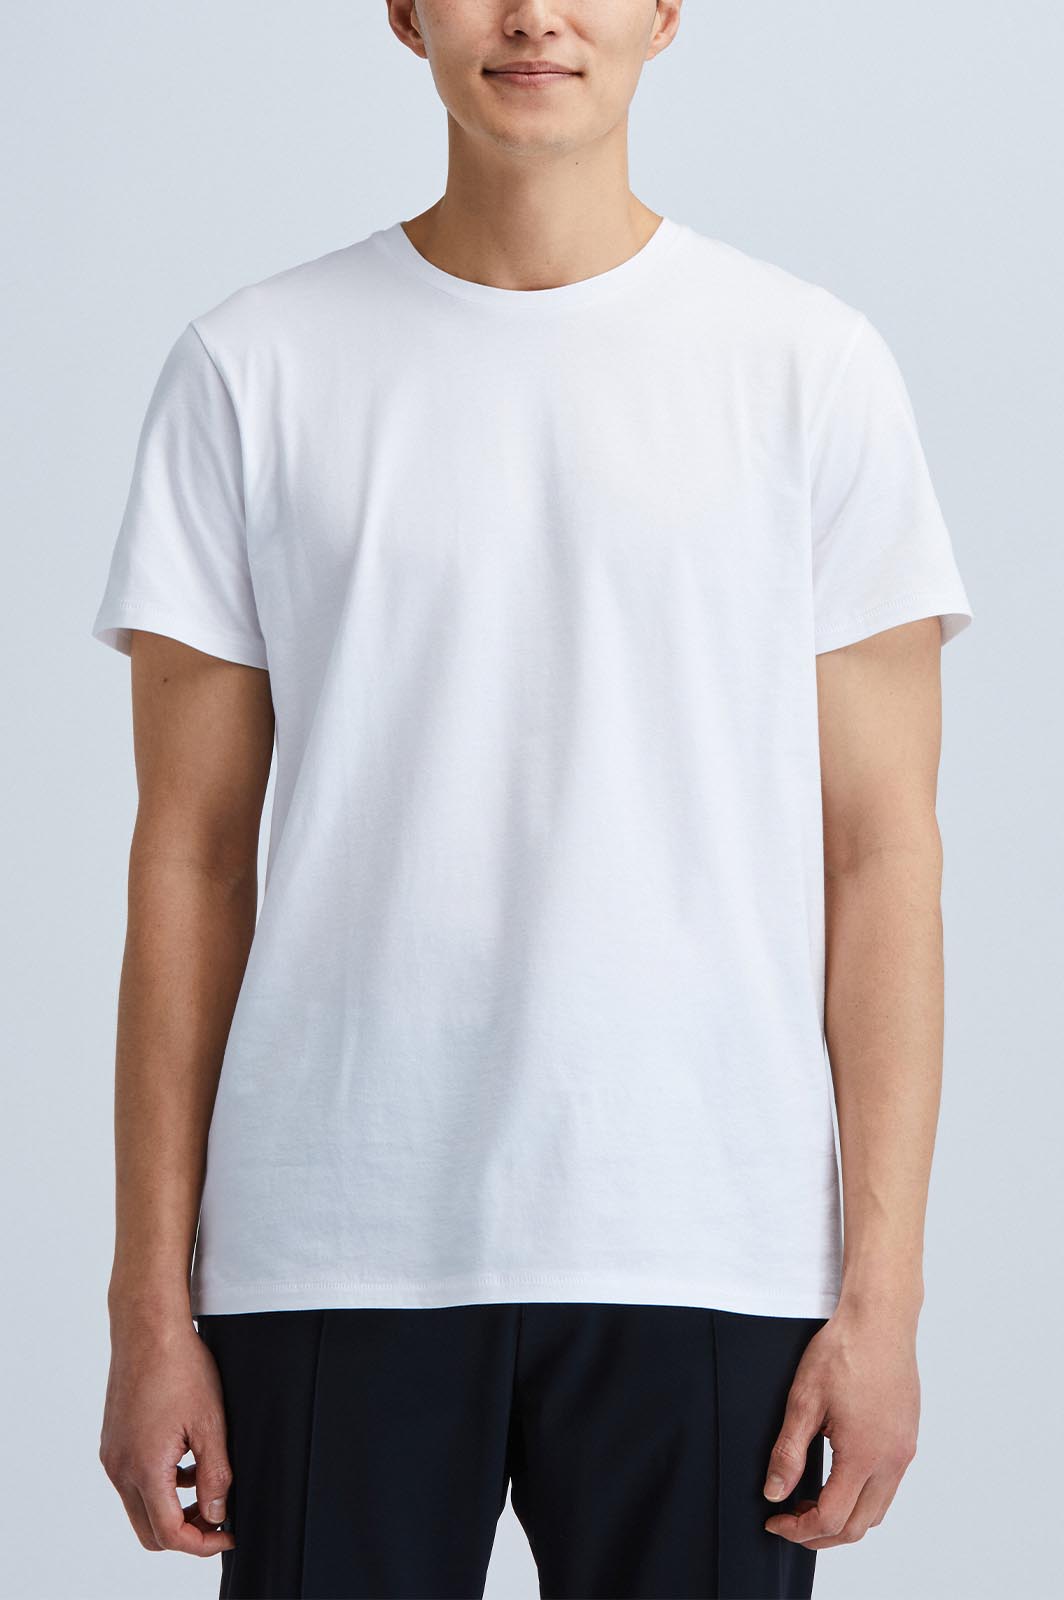 plain white t shirt model